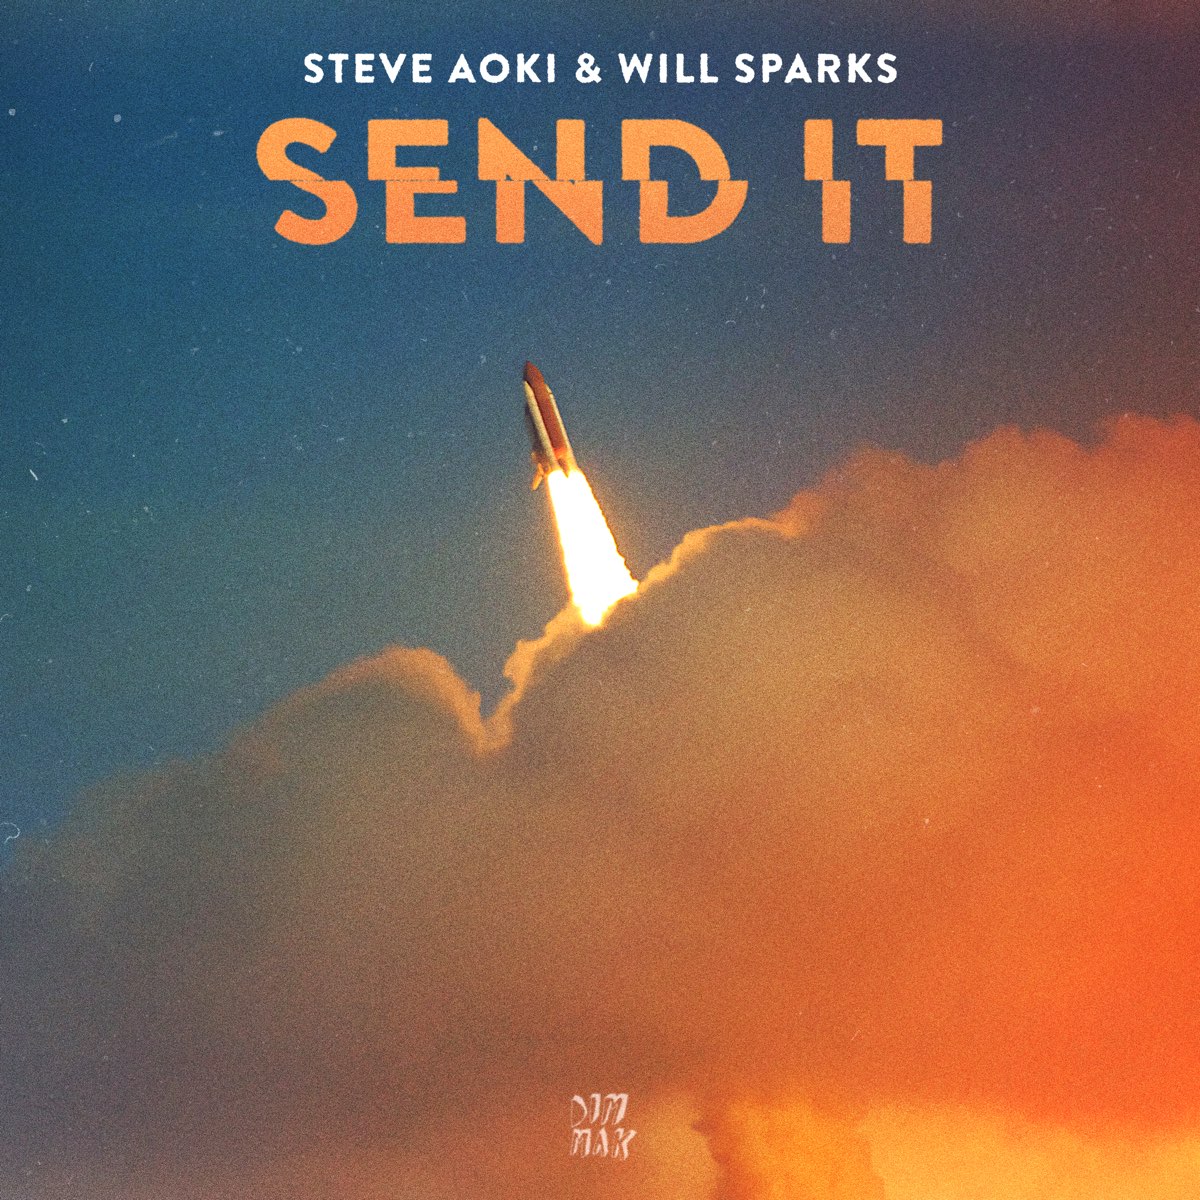 Steve Aoki & Will Sparks Send It cover artwork